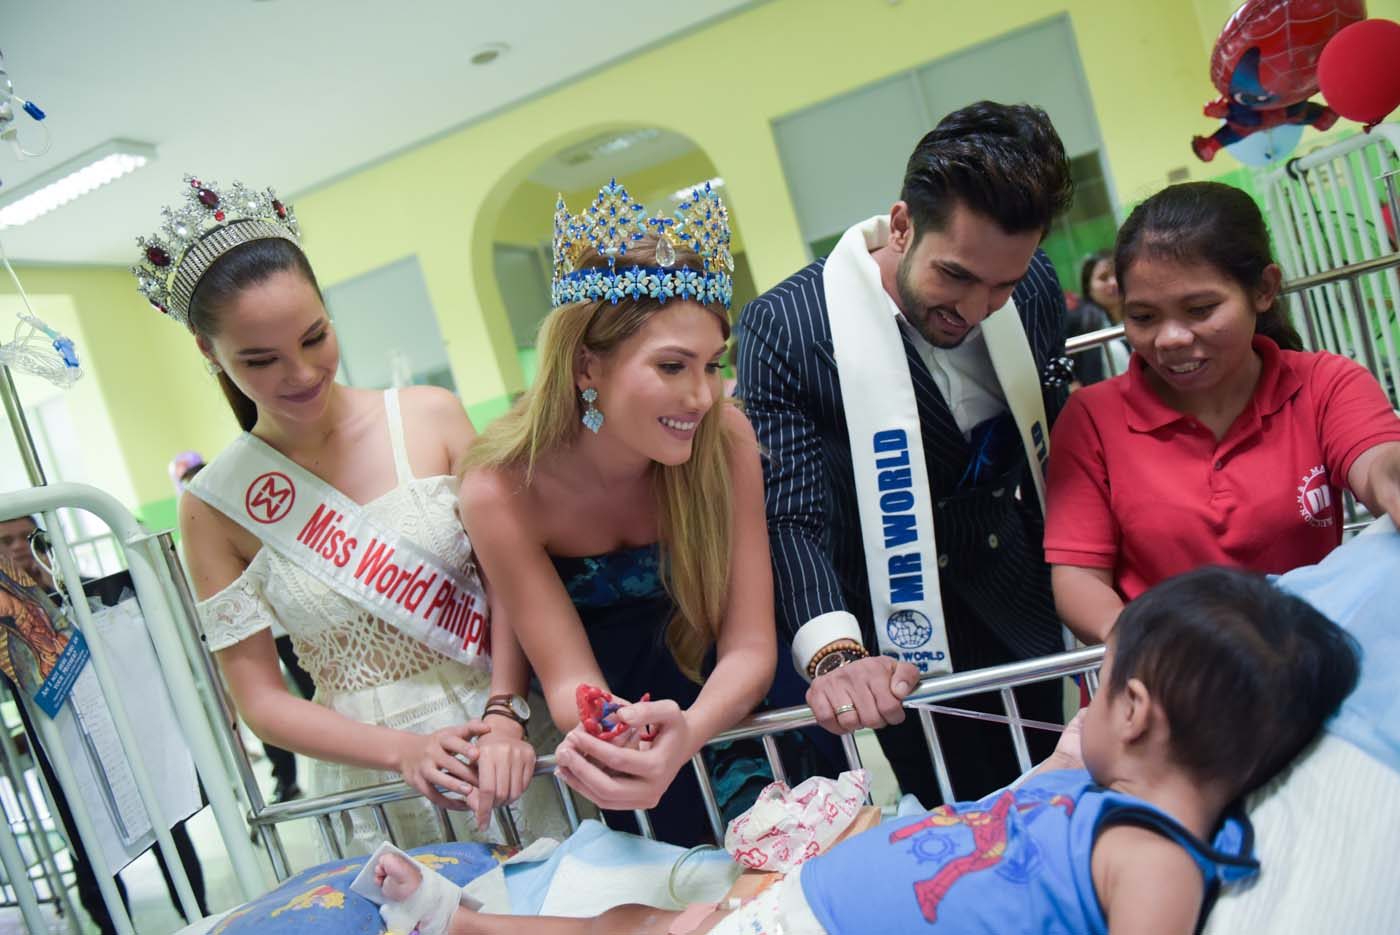 IN PHOTOS: Miss World, Mr World winners visit PGH